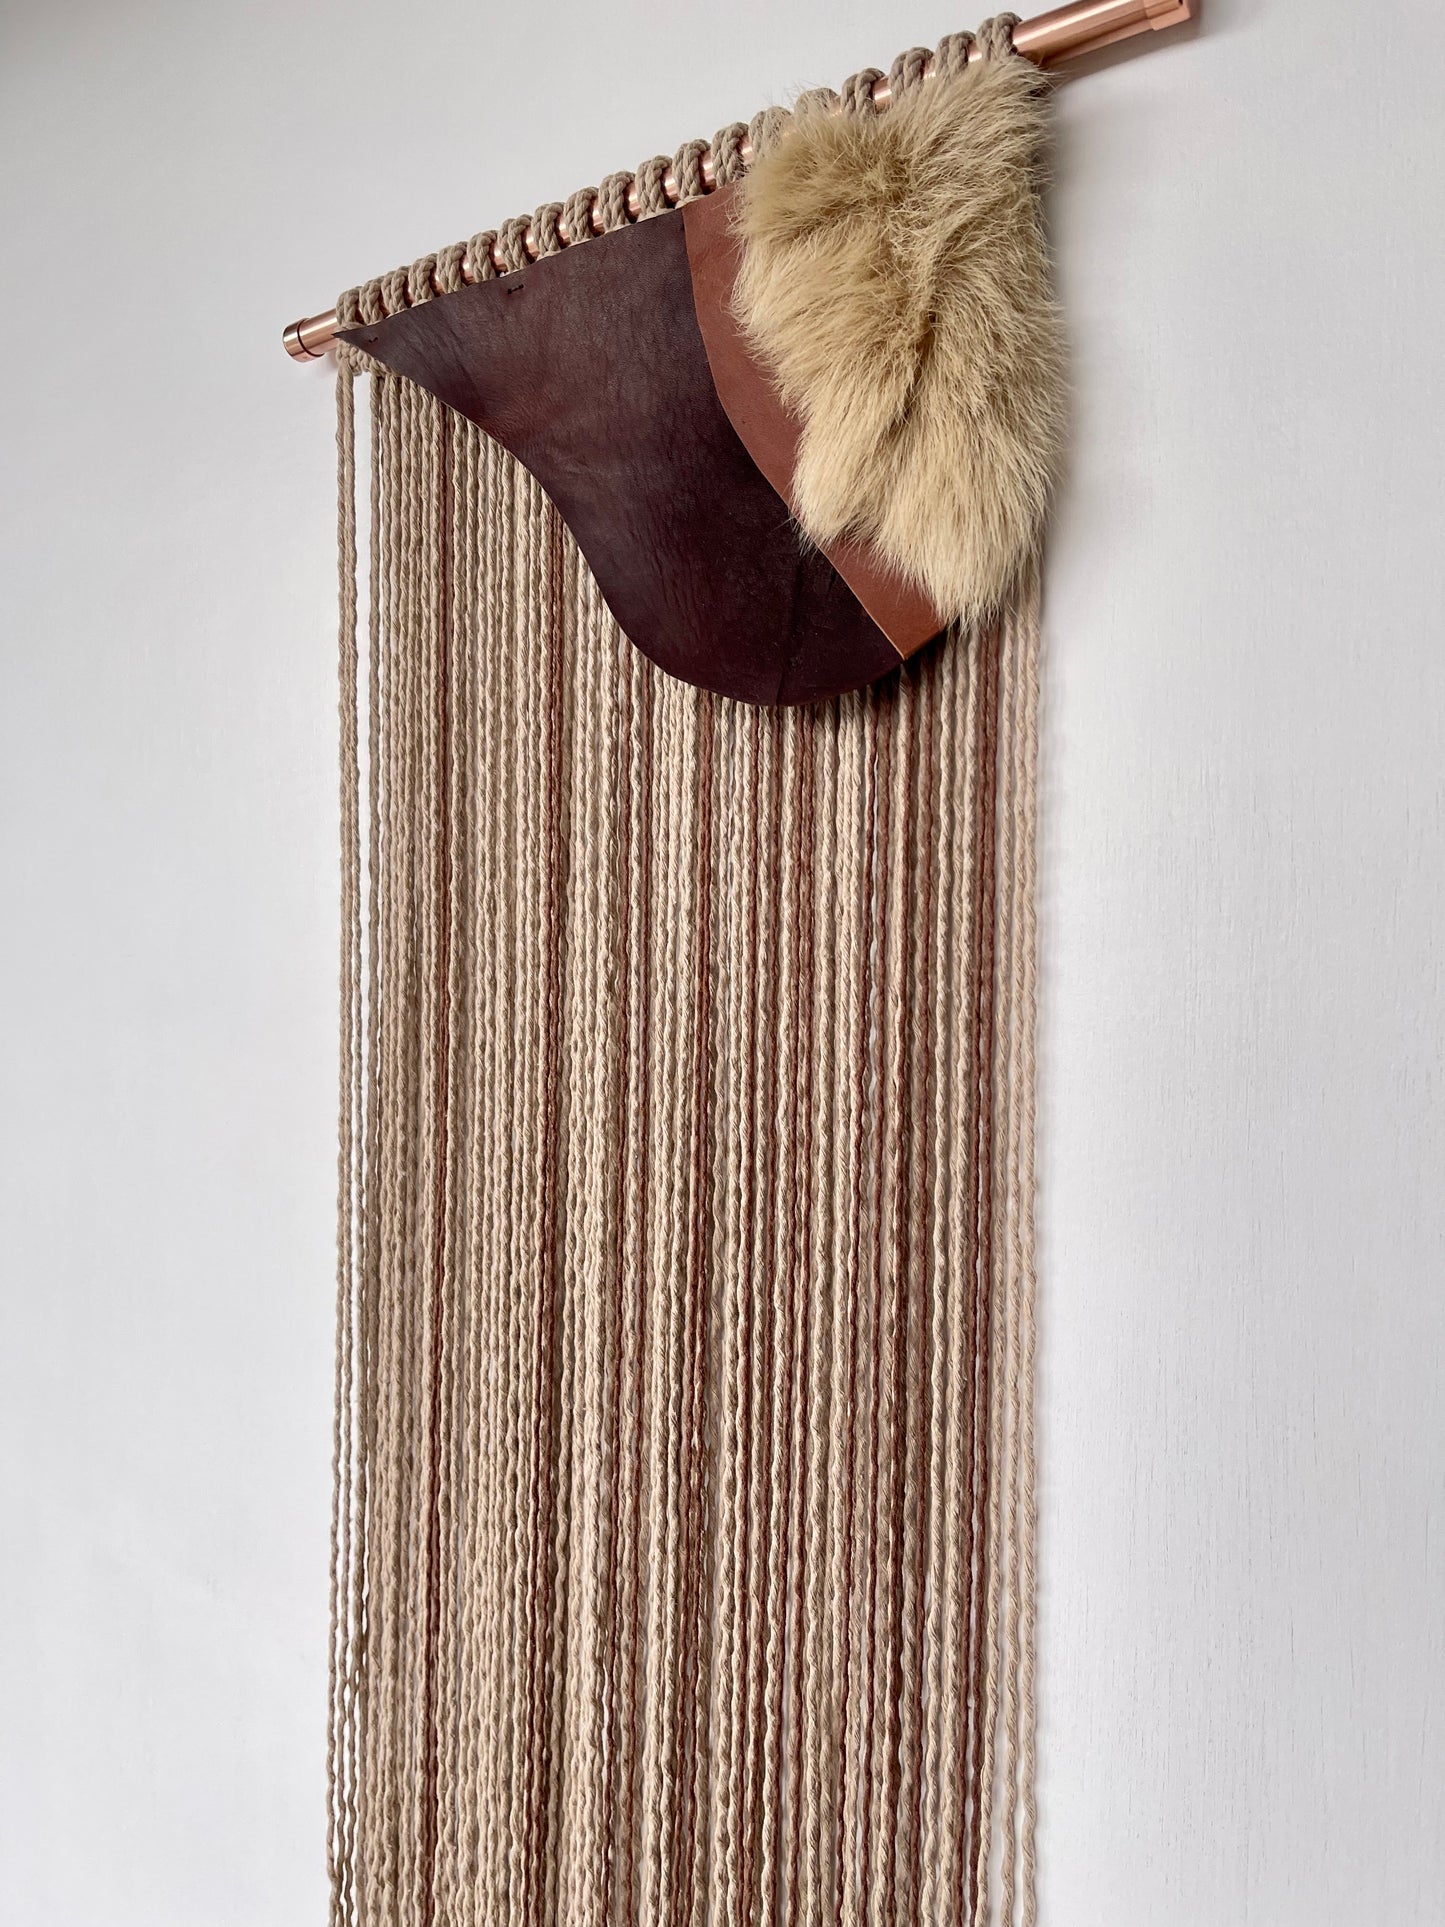 Handmade brown cotton cord leather sheepskin fibre art wall hanging